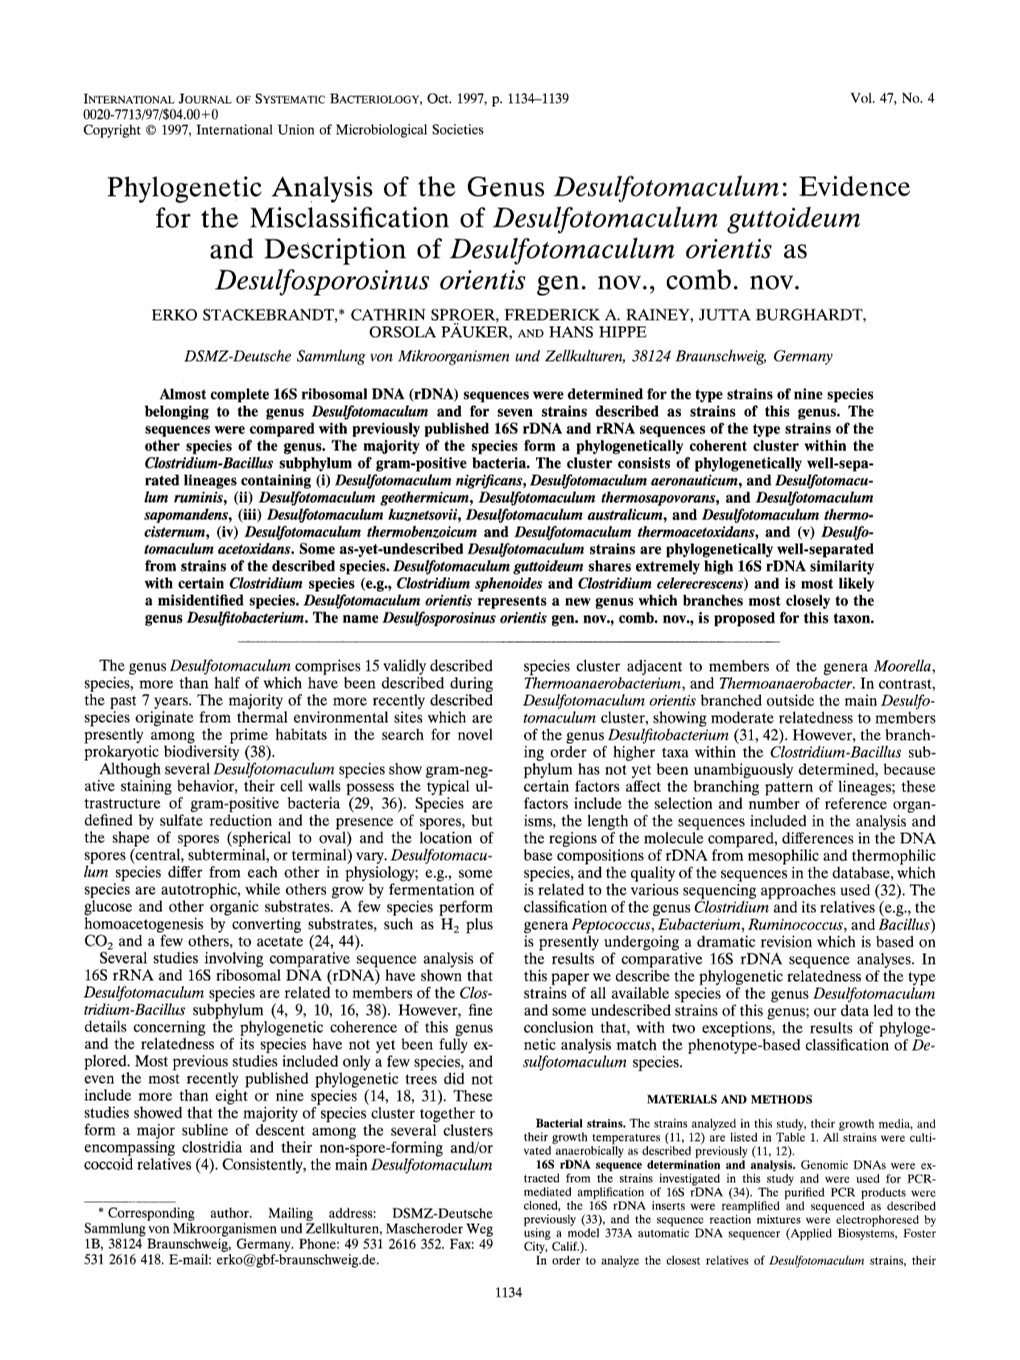 Phylogenetic Analysis of the Genus Desulfotomaculum